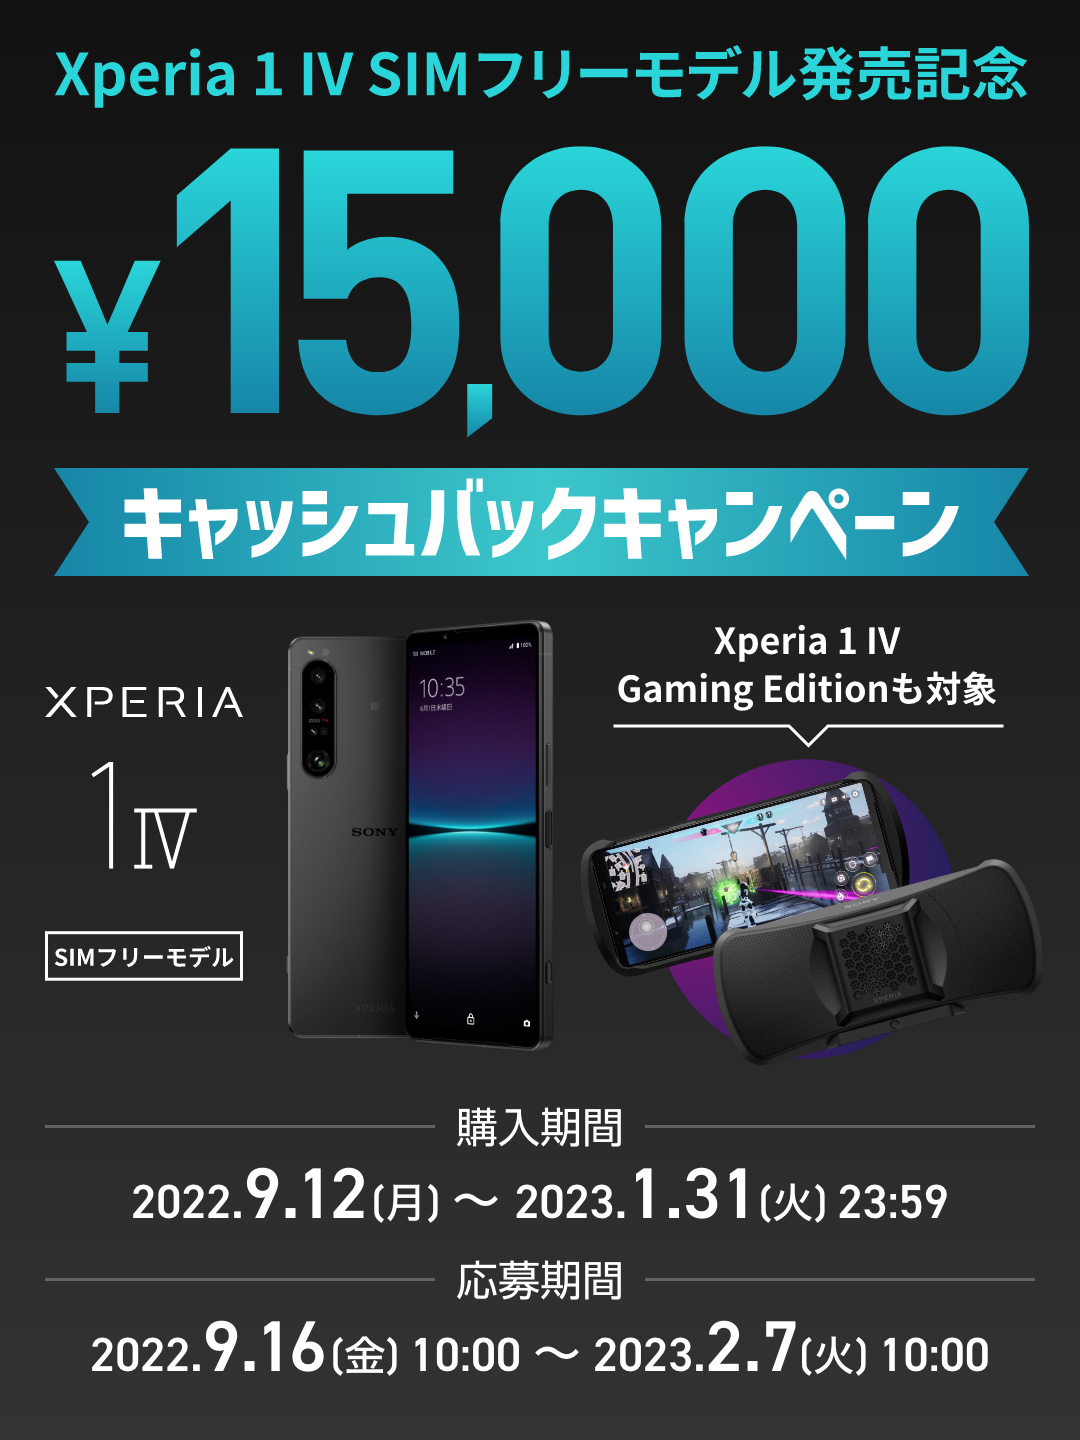 Xperia 1 IV SIMフリーモデル発売記念 ￥15,000キャッシュバックキャンペーン 購入期間：2022.9.12[月]～2023.1.31[火]23:59 応募期間：2022.9.16[金]10:00～2023.2.7[火]10:00 Xperia 1 IV SIMフリー Xperia 1 IV Gaming Editionも対象